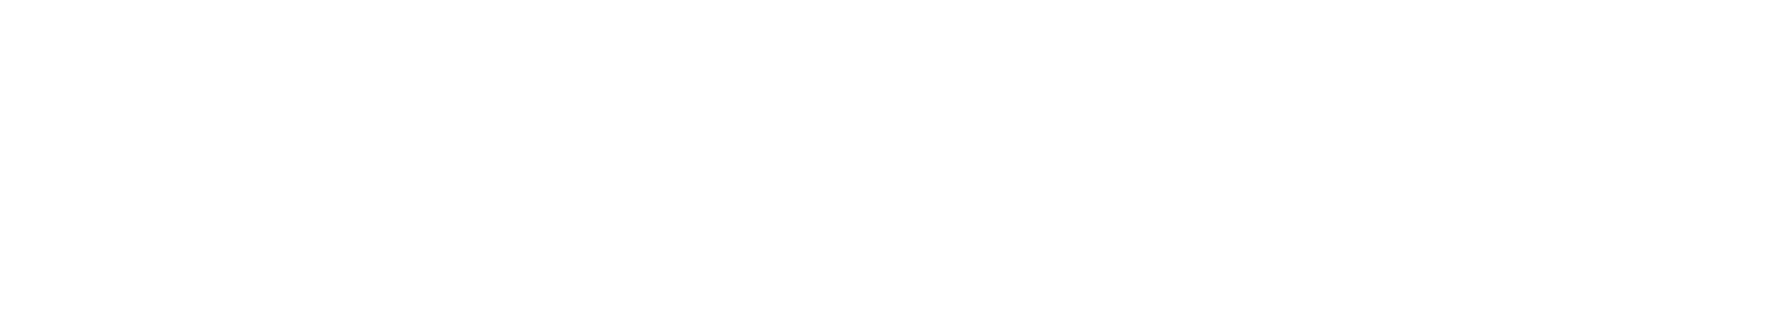 novartis_logo_white (1)